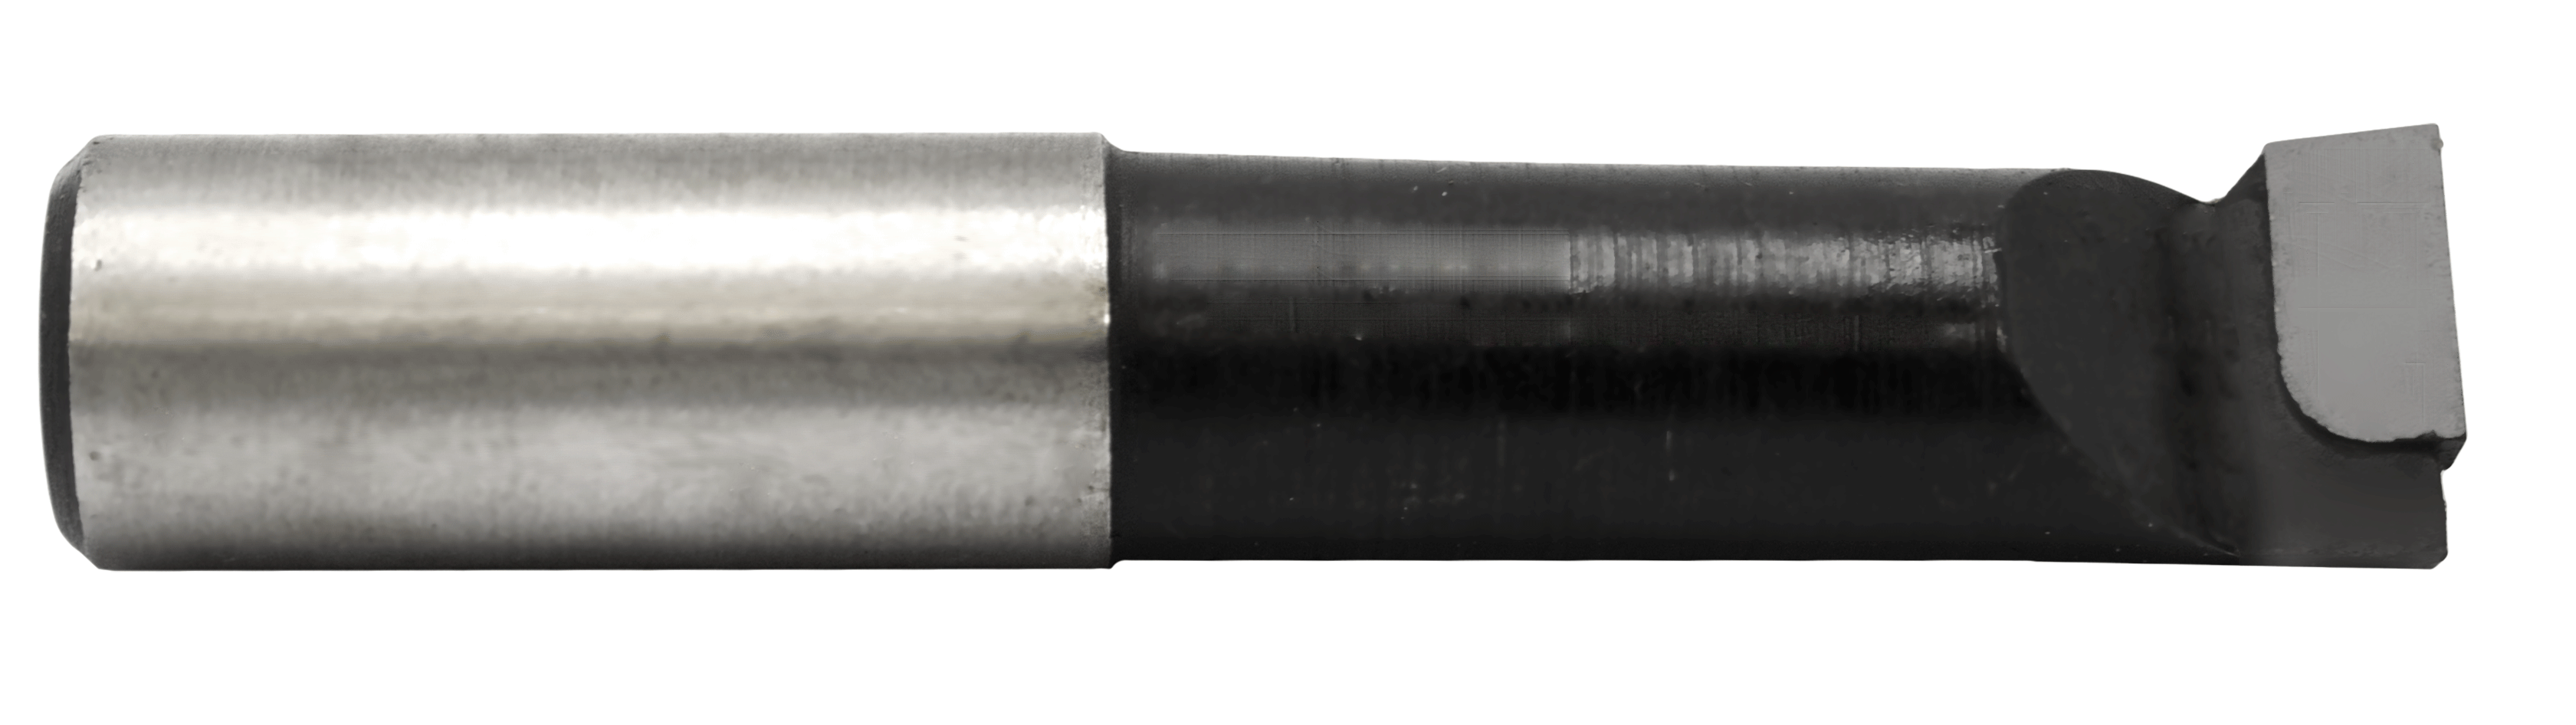 Super-Bore 12mm" C-2 for Cast Iron Applications